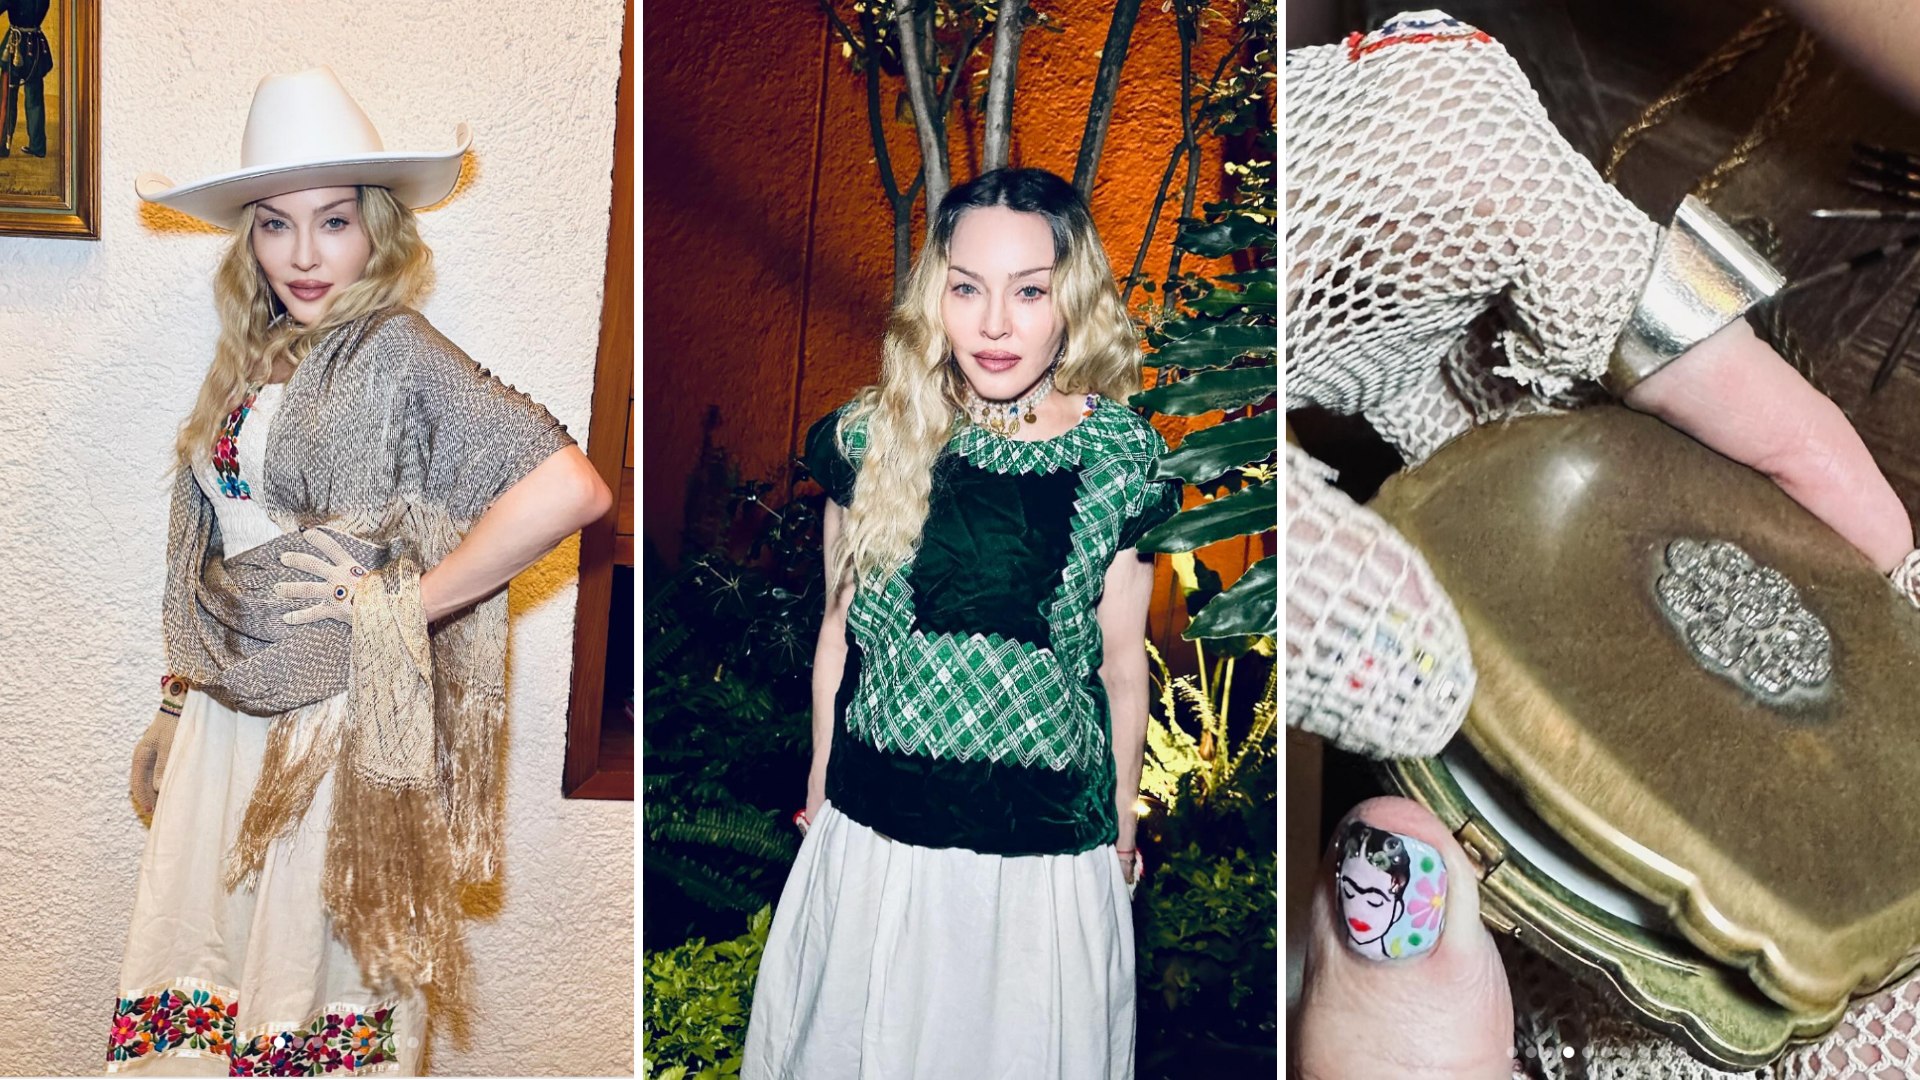 Madonna visits Frida Kahlo's museum home 